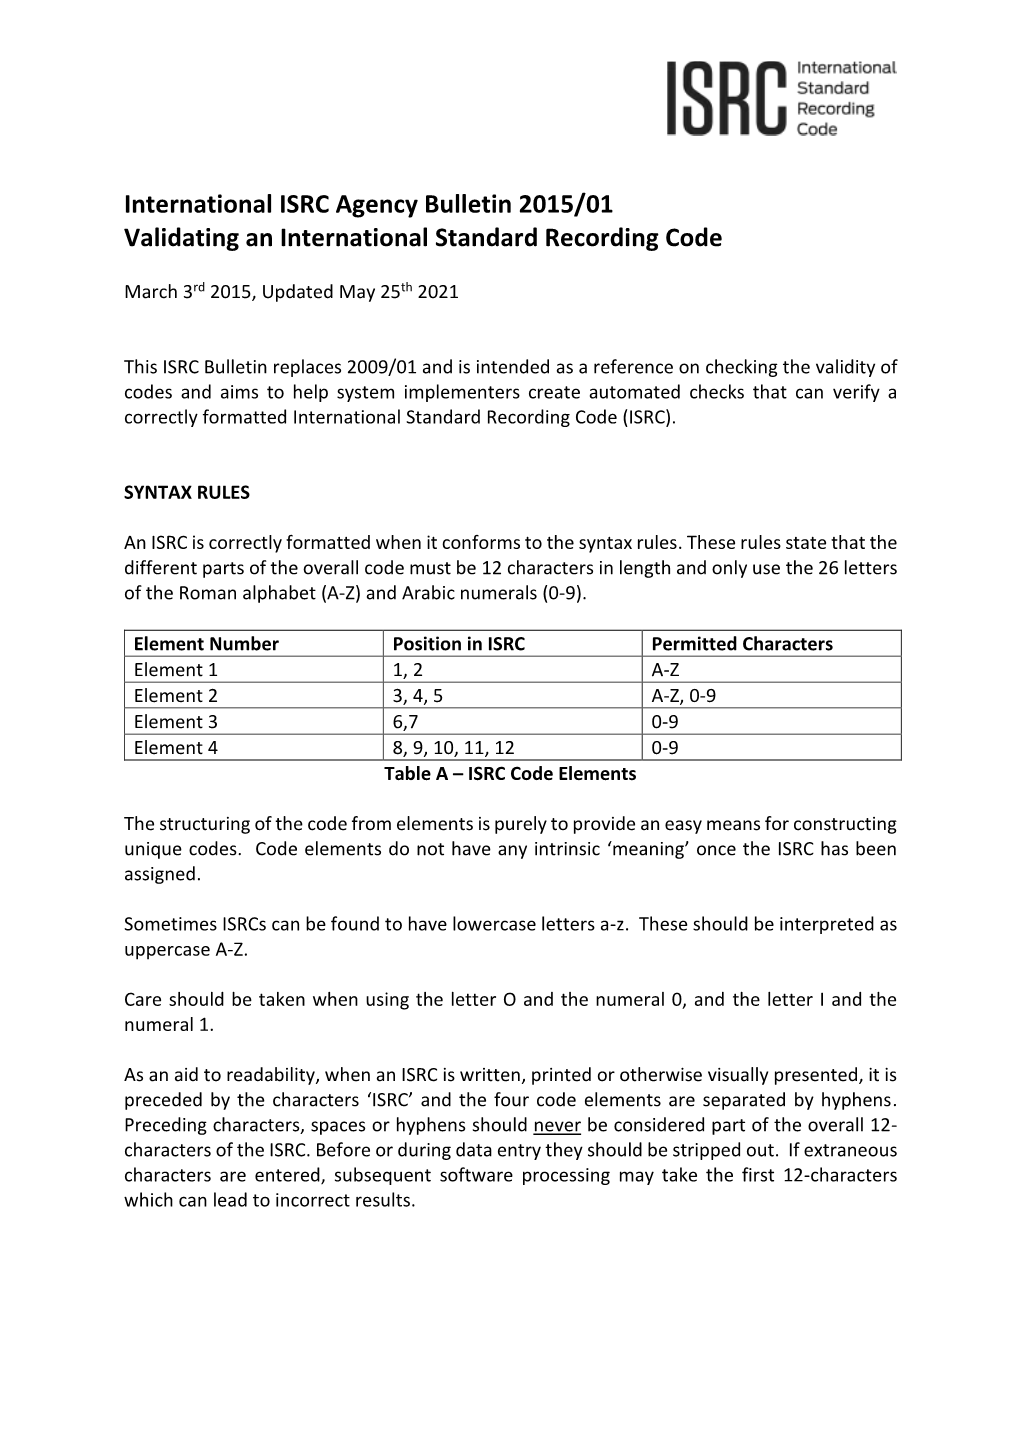 International ISRC Agency Bulletin 2015/01 Validating an International Standard Recording Code